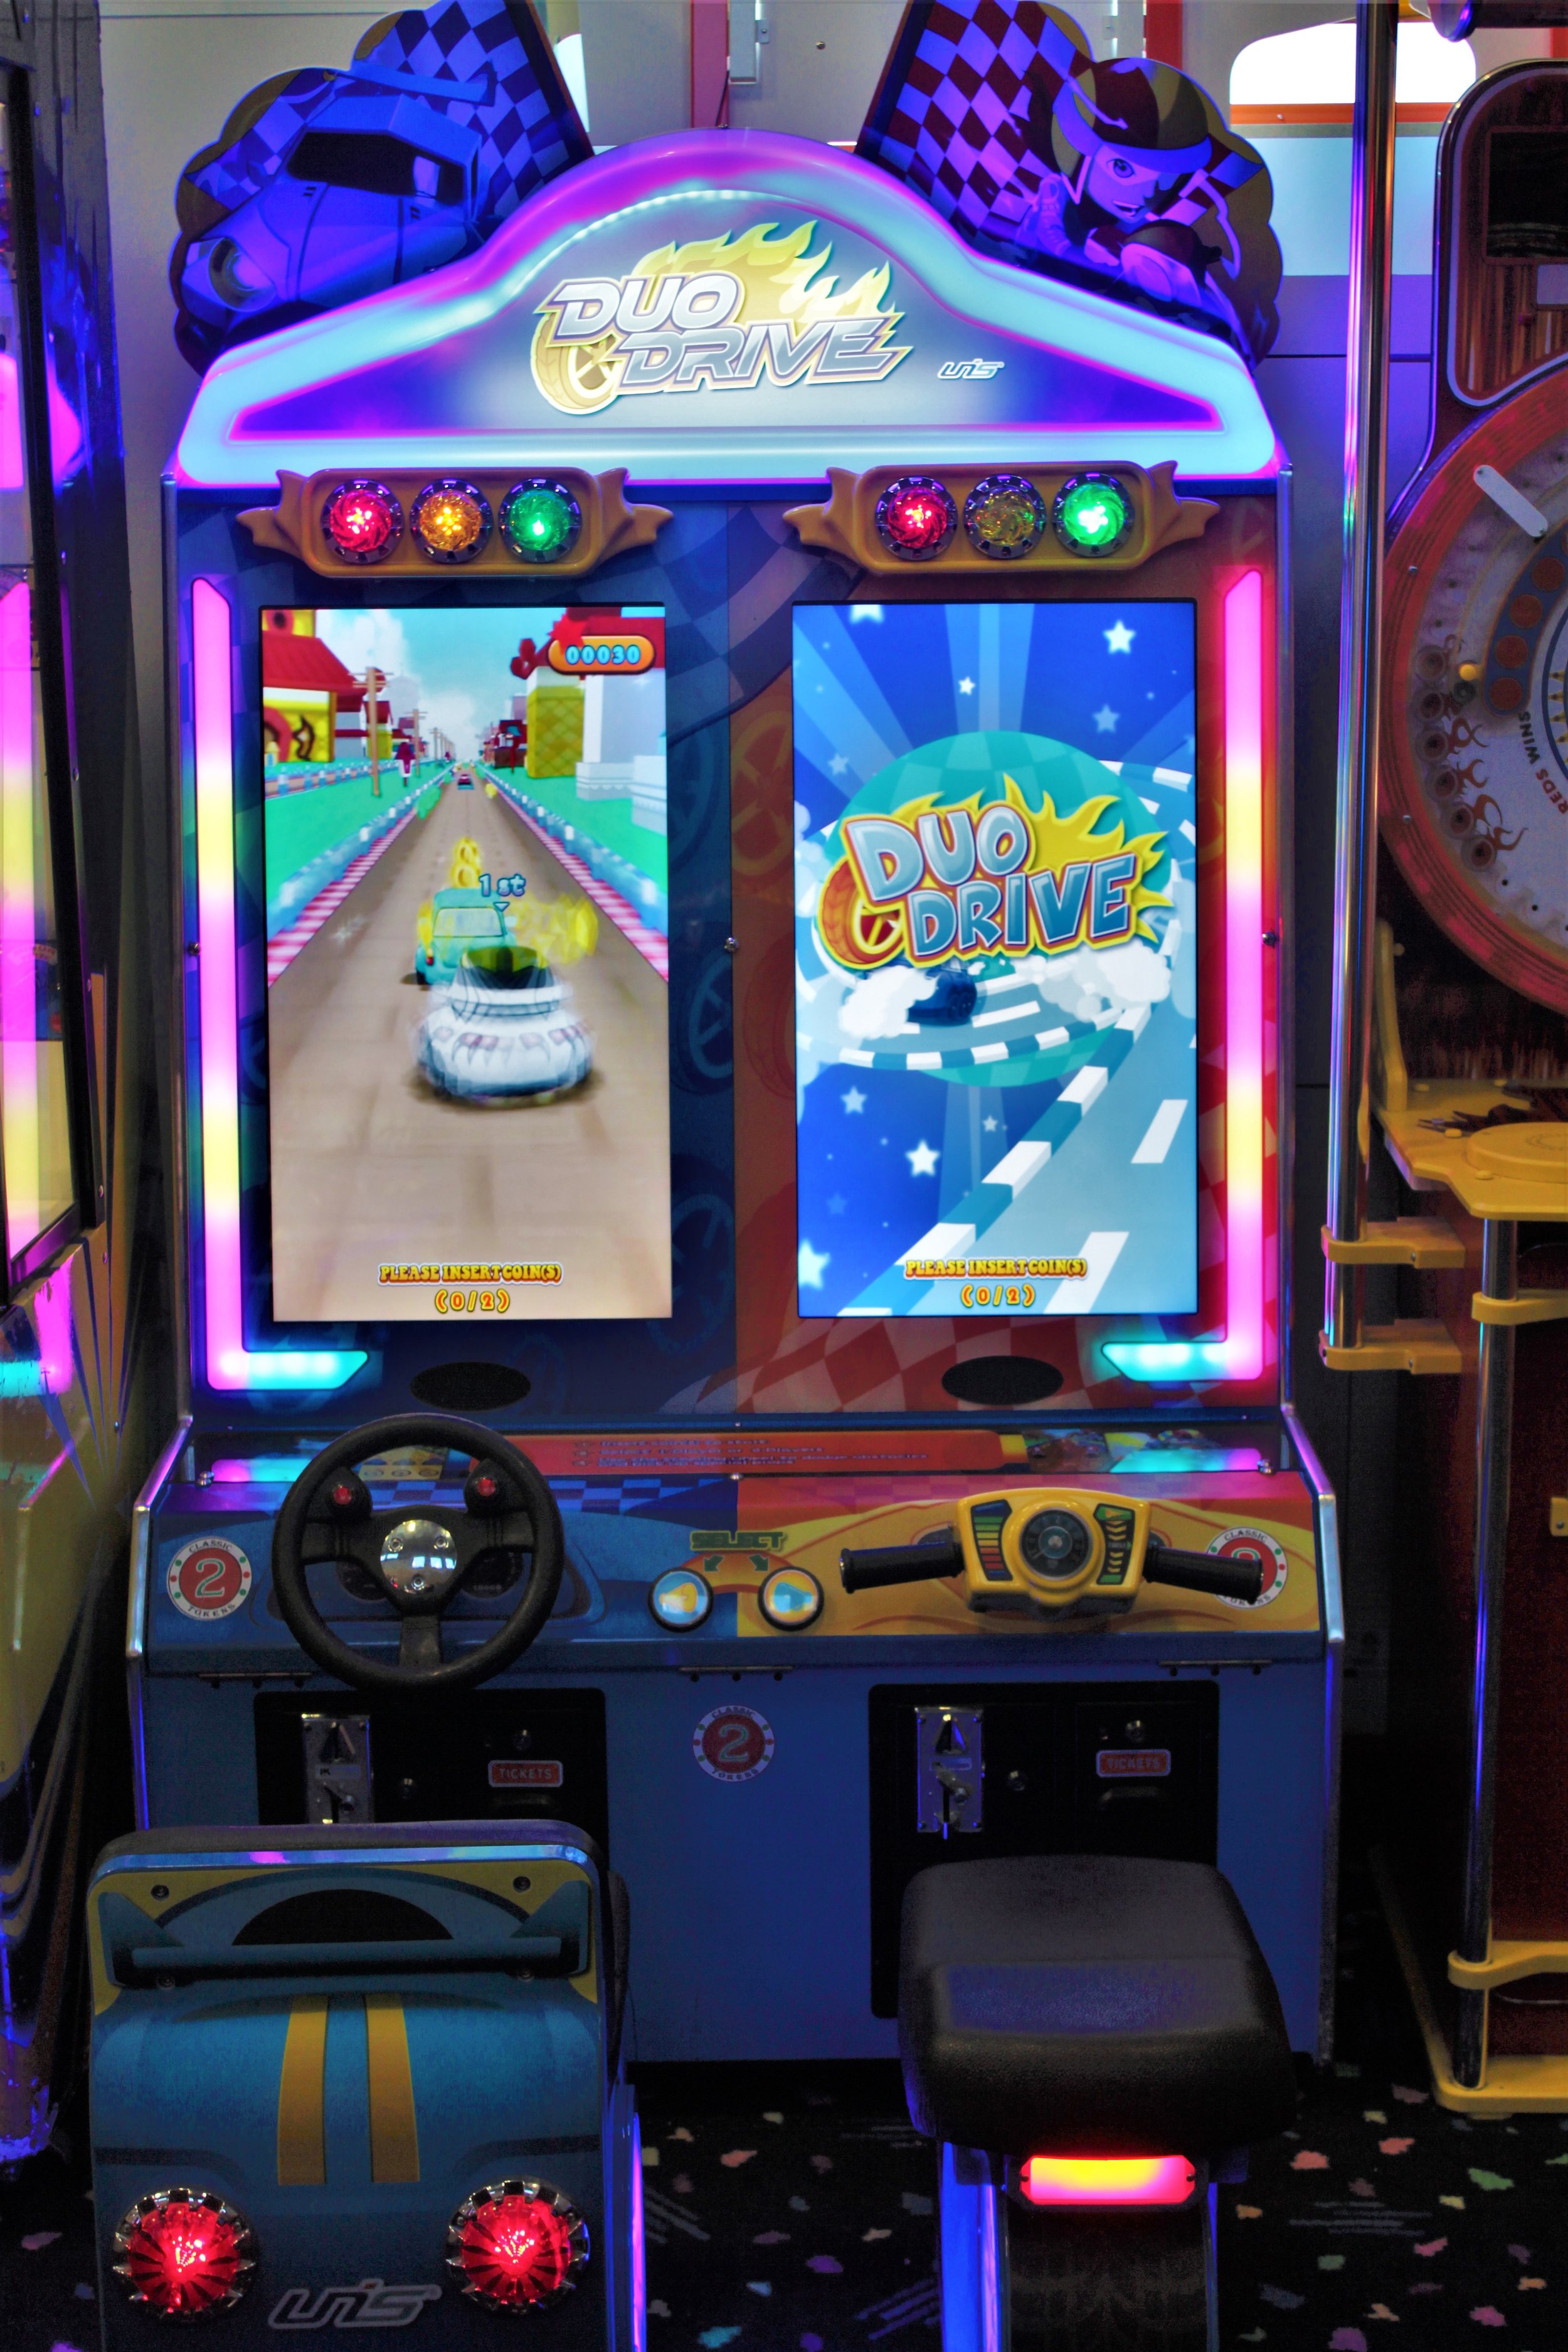  duo drive children’s arcade game 